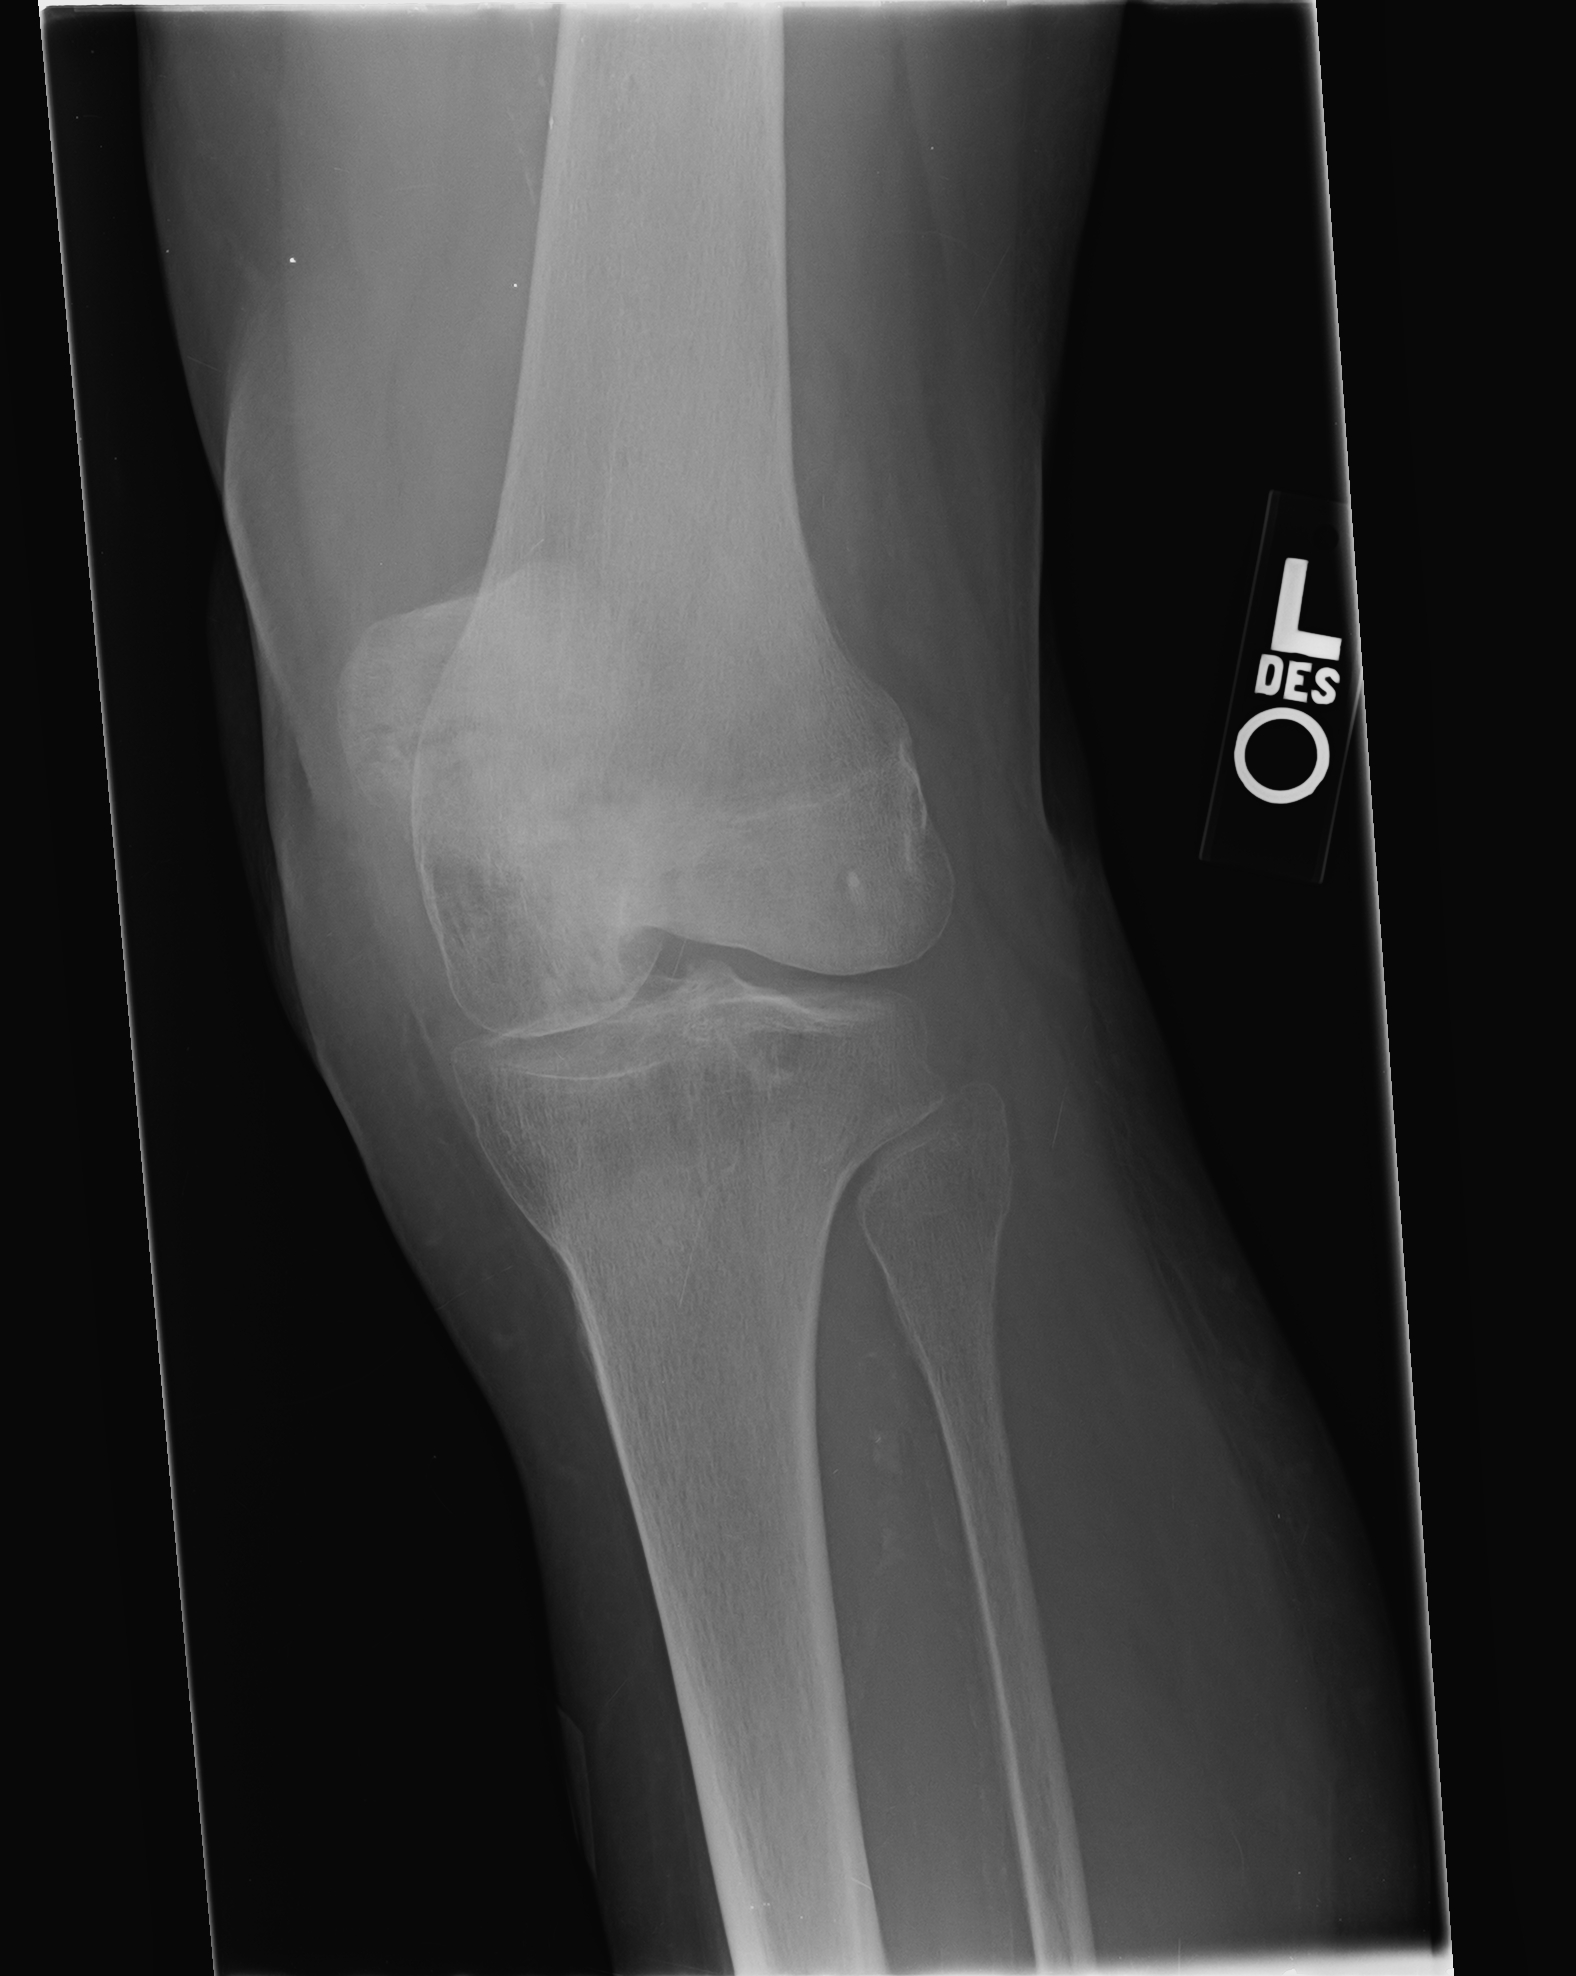 Patella Fracture X Ray